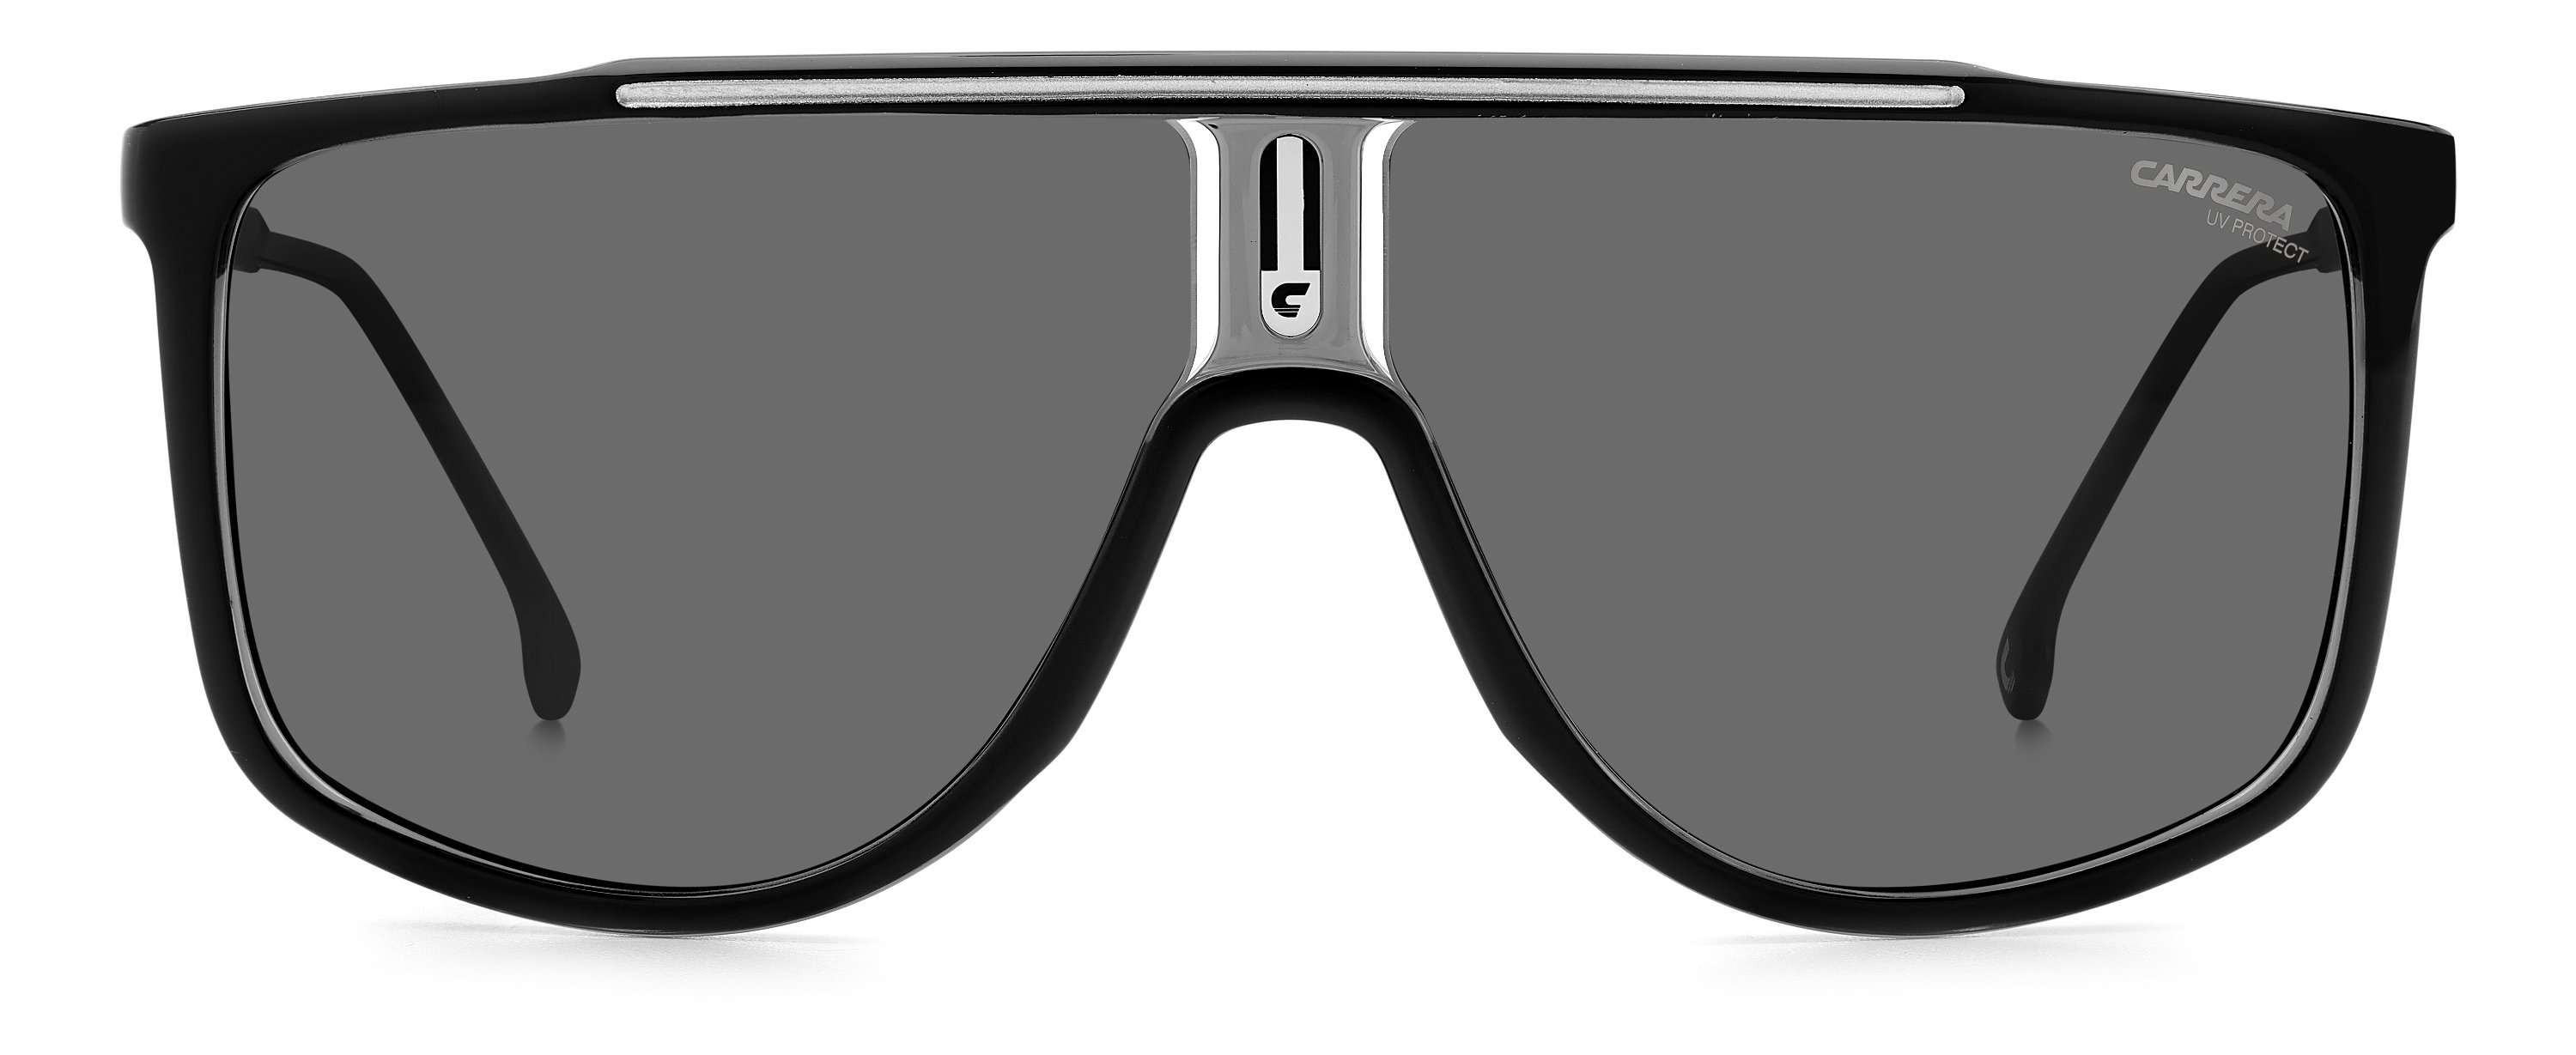 Carrera Sonnenbrille 1056/S 08A schwarz grau